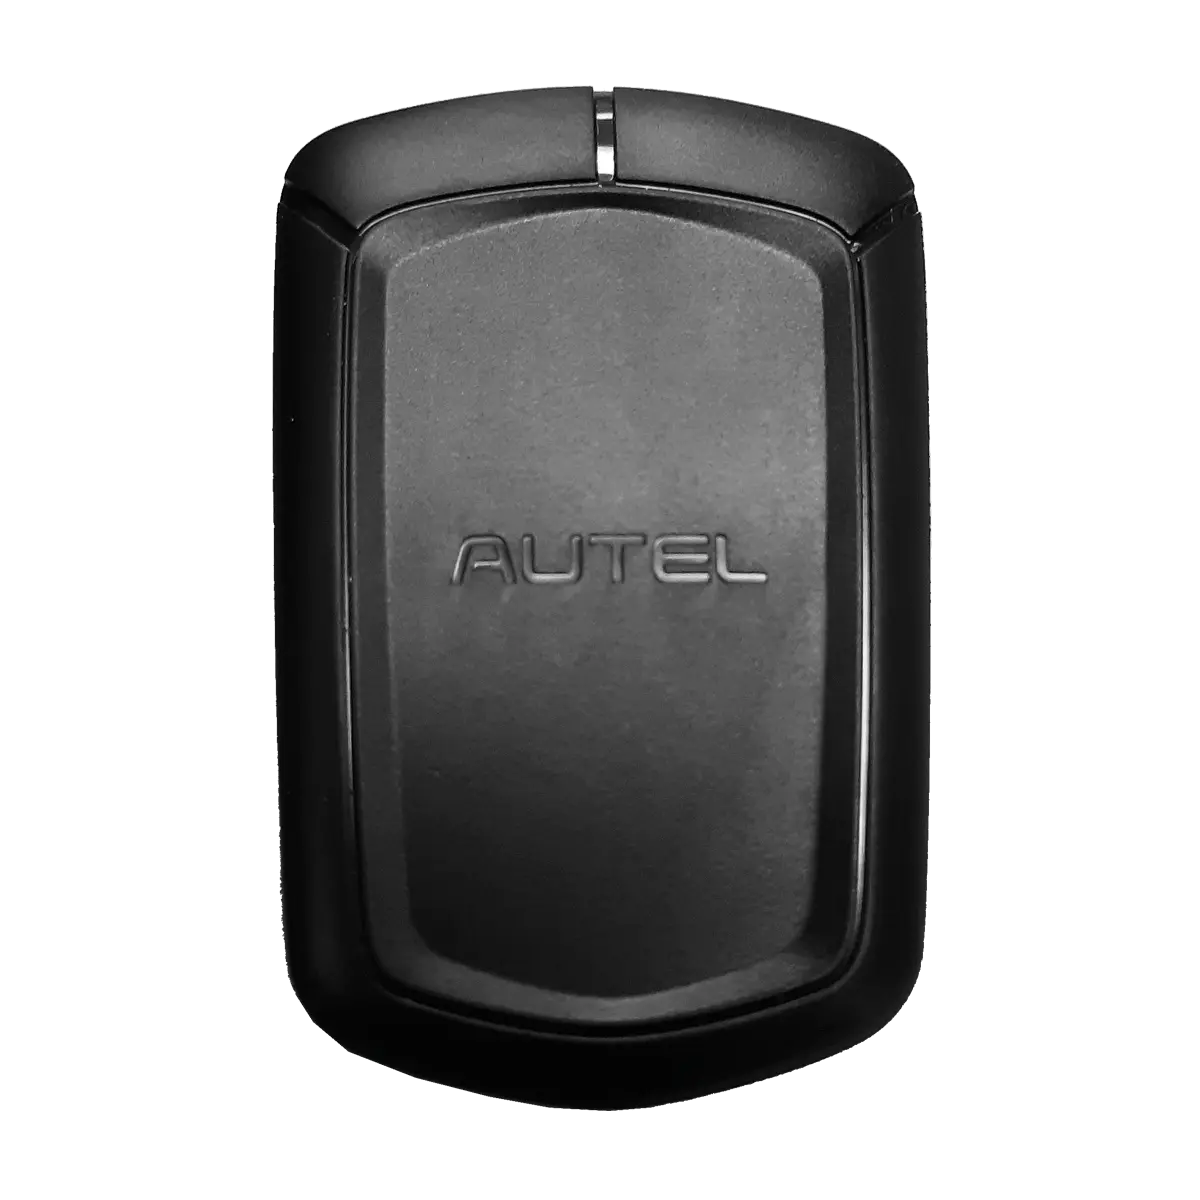 Autel APB112 Smart Key Fob Emulator for Autel IMMO Tools Autel